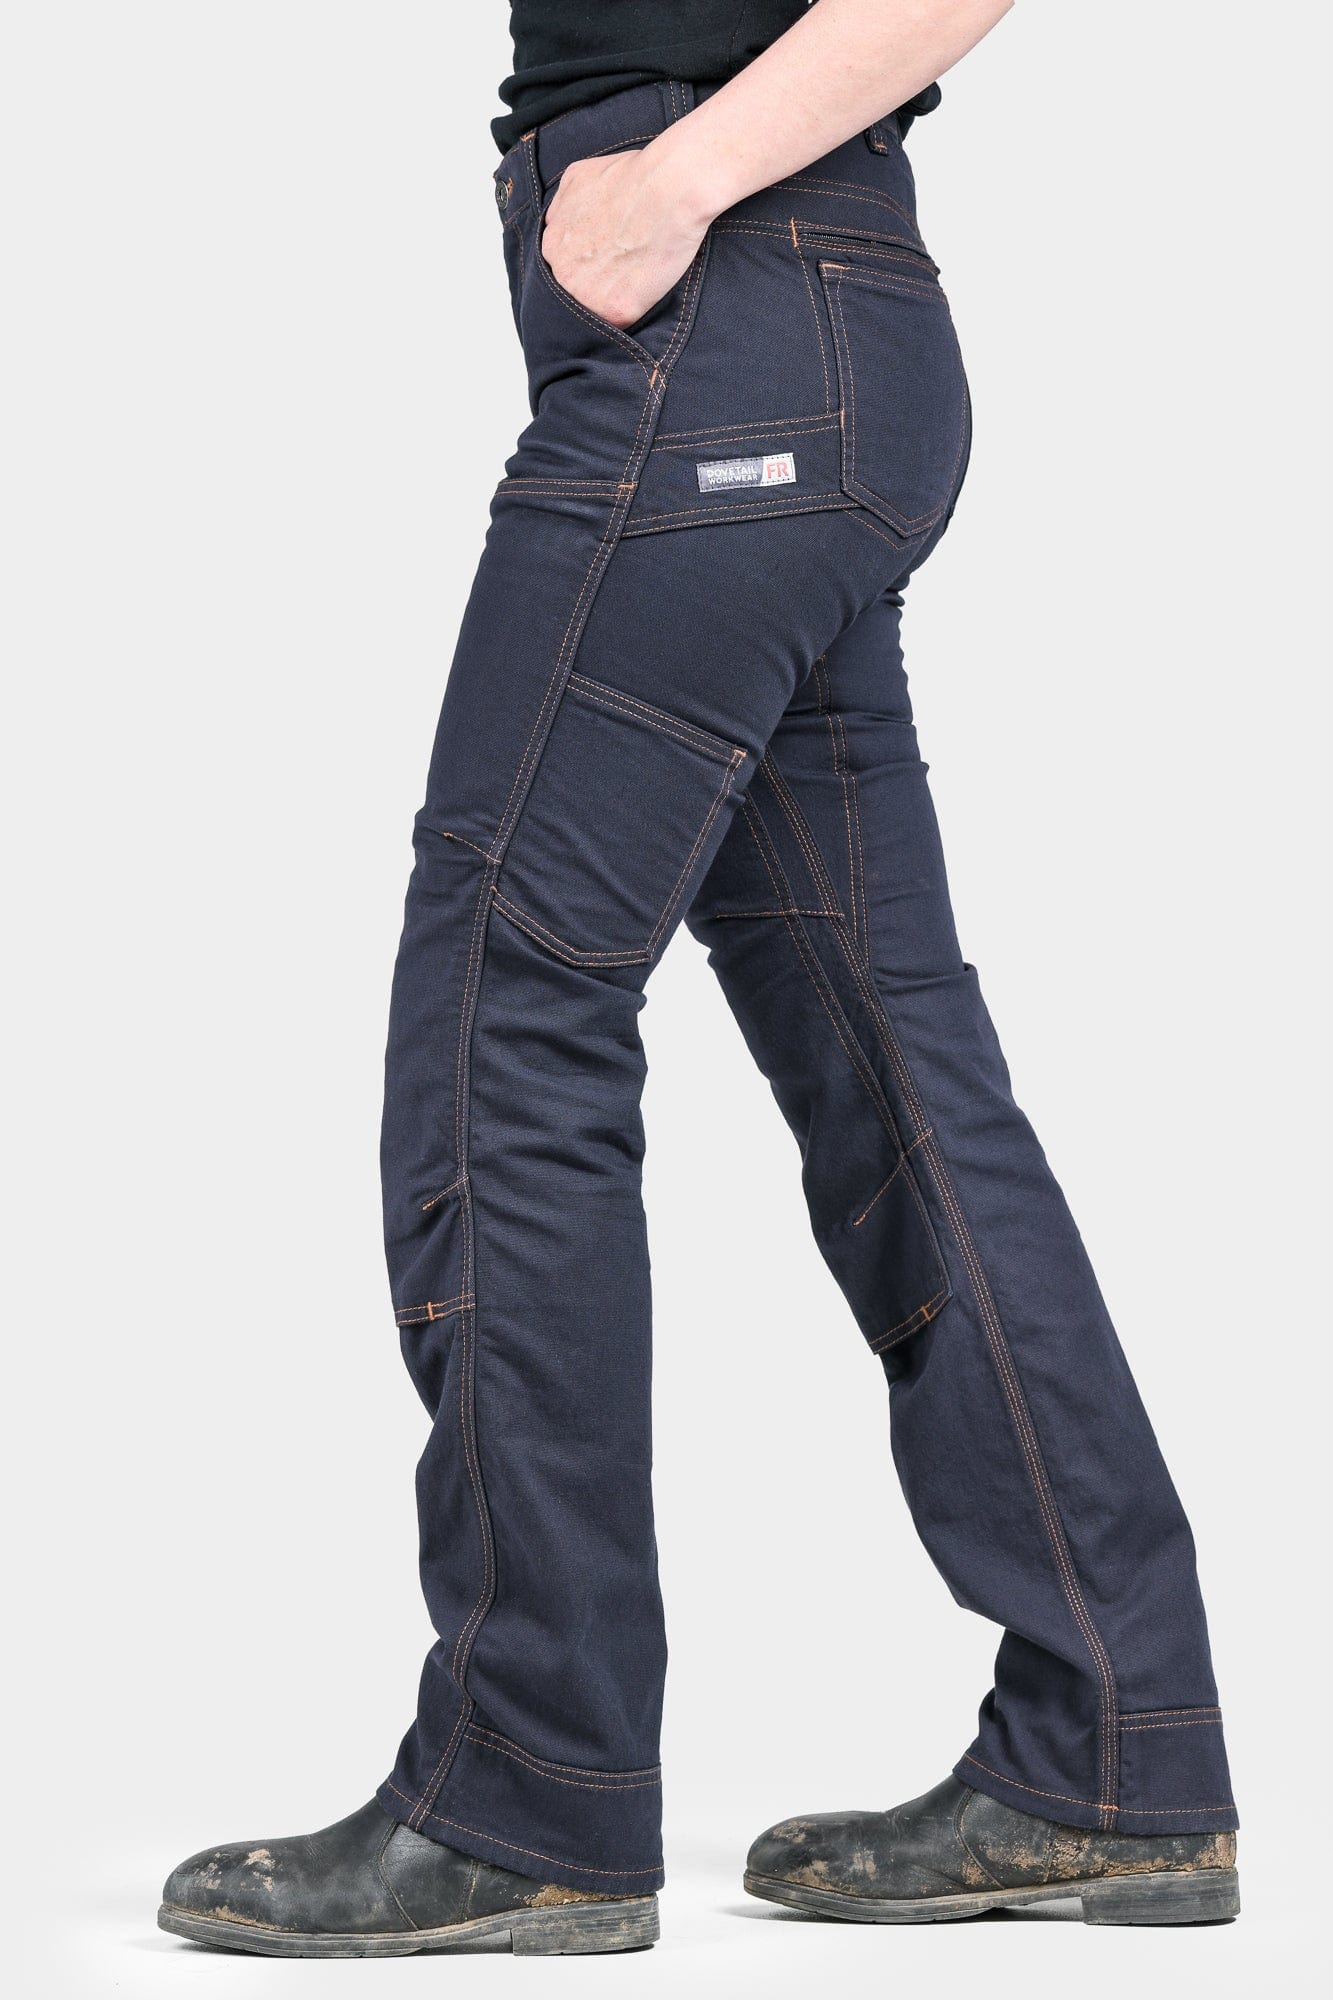 Dovetail Workwear Women's Saddle Brown Canvas Work Pants (12 X 32